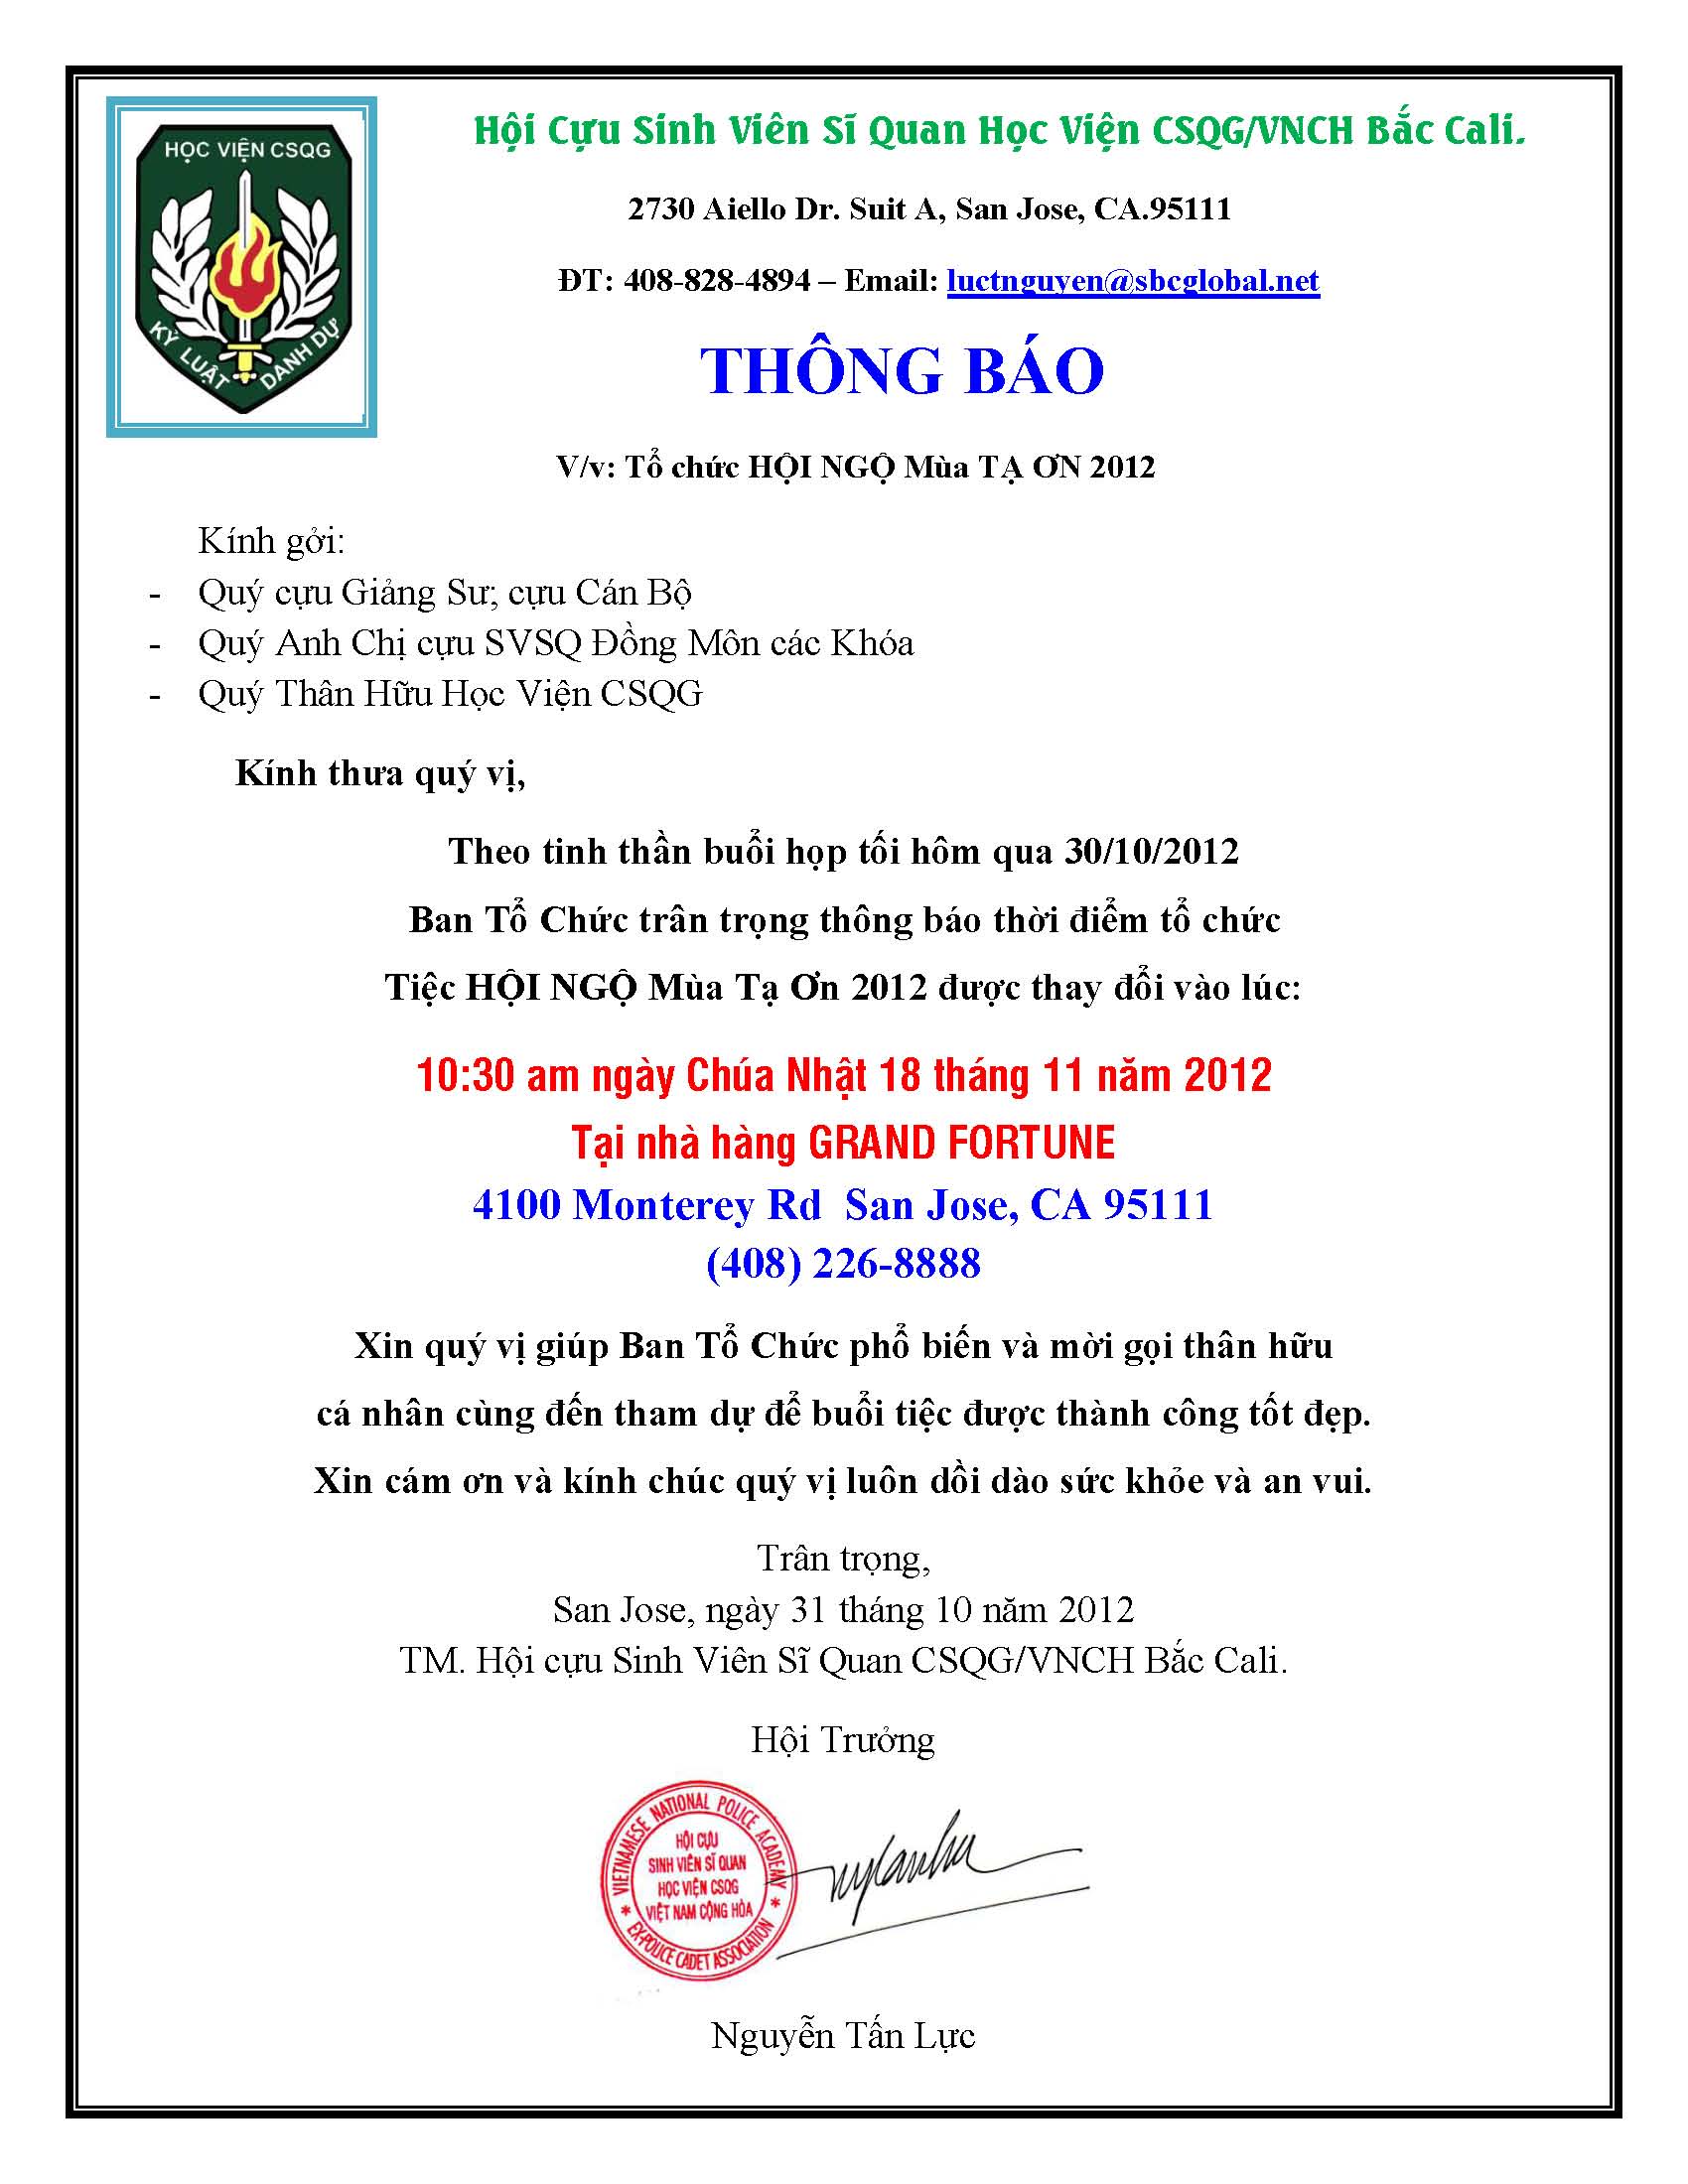 Thong bao_Tiec_HN_mua_Ta_On_2012